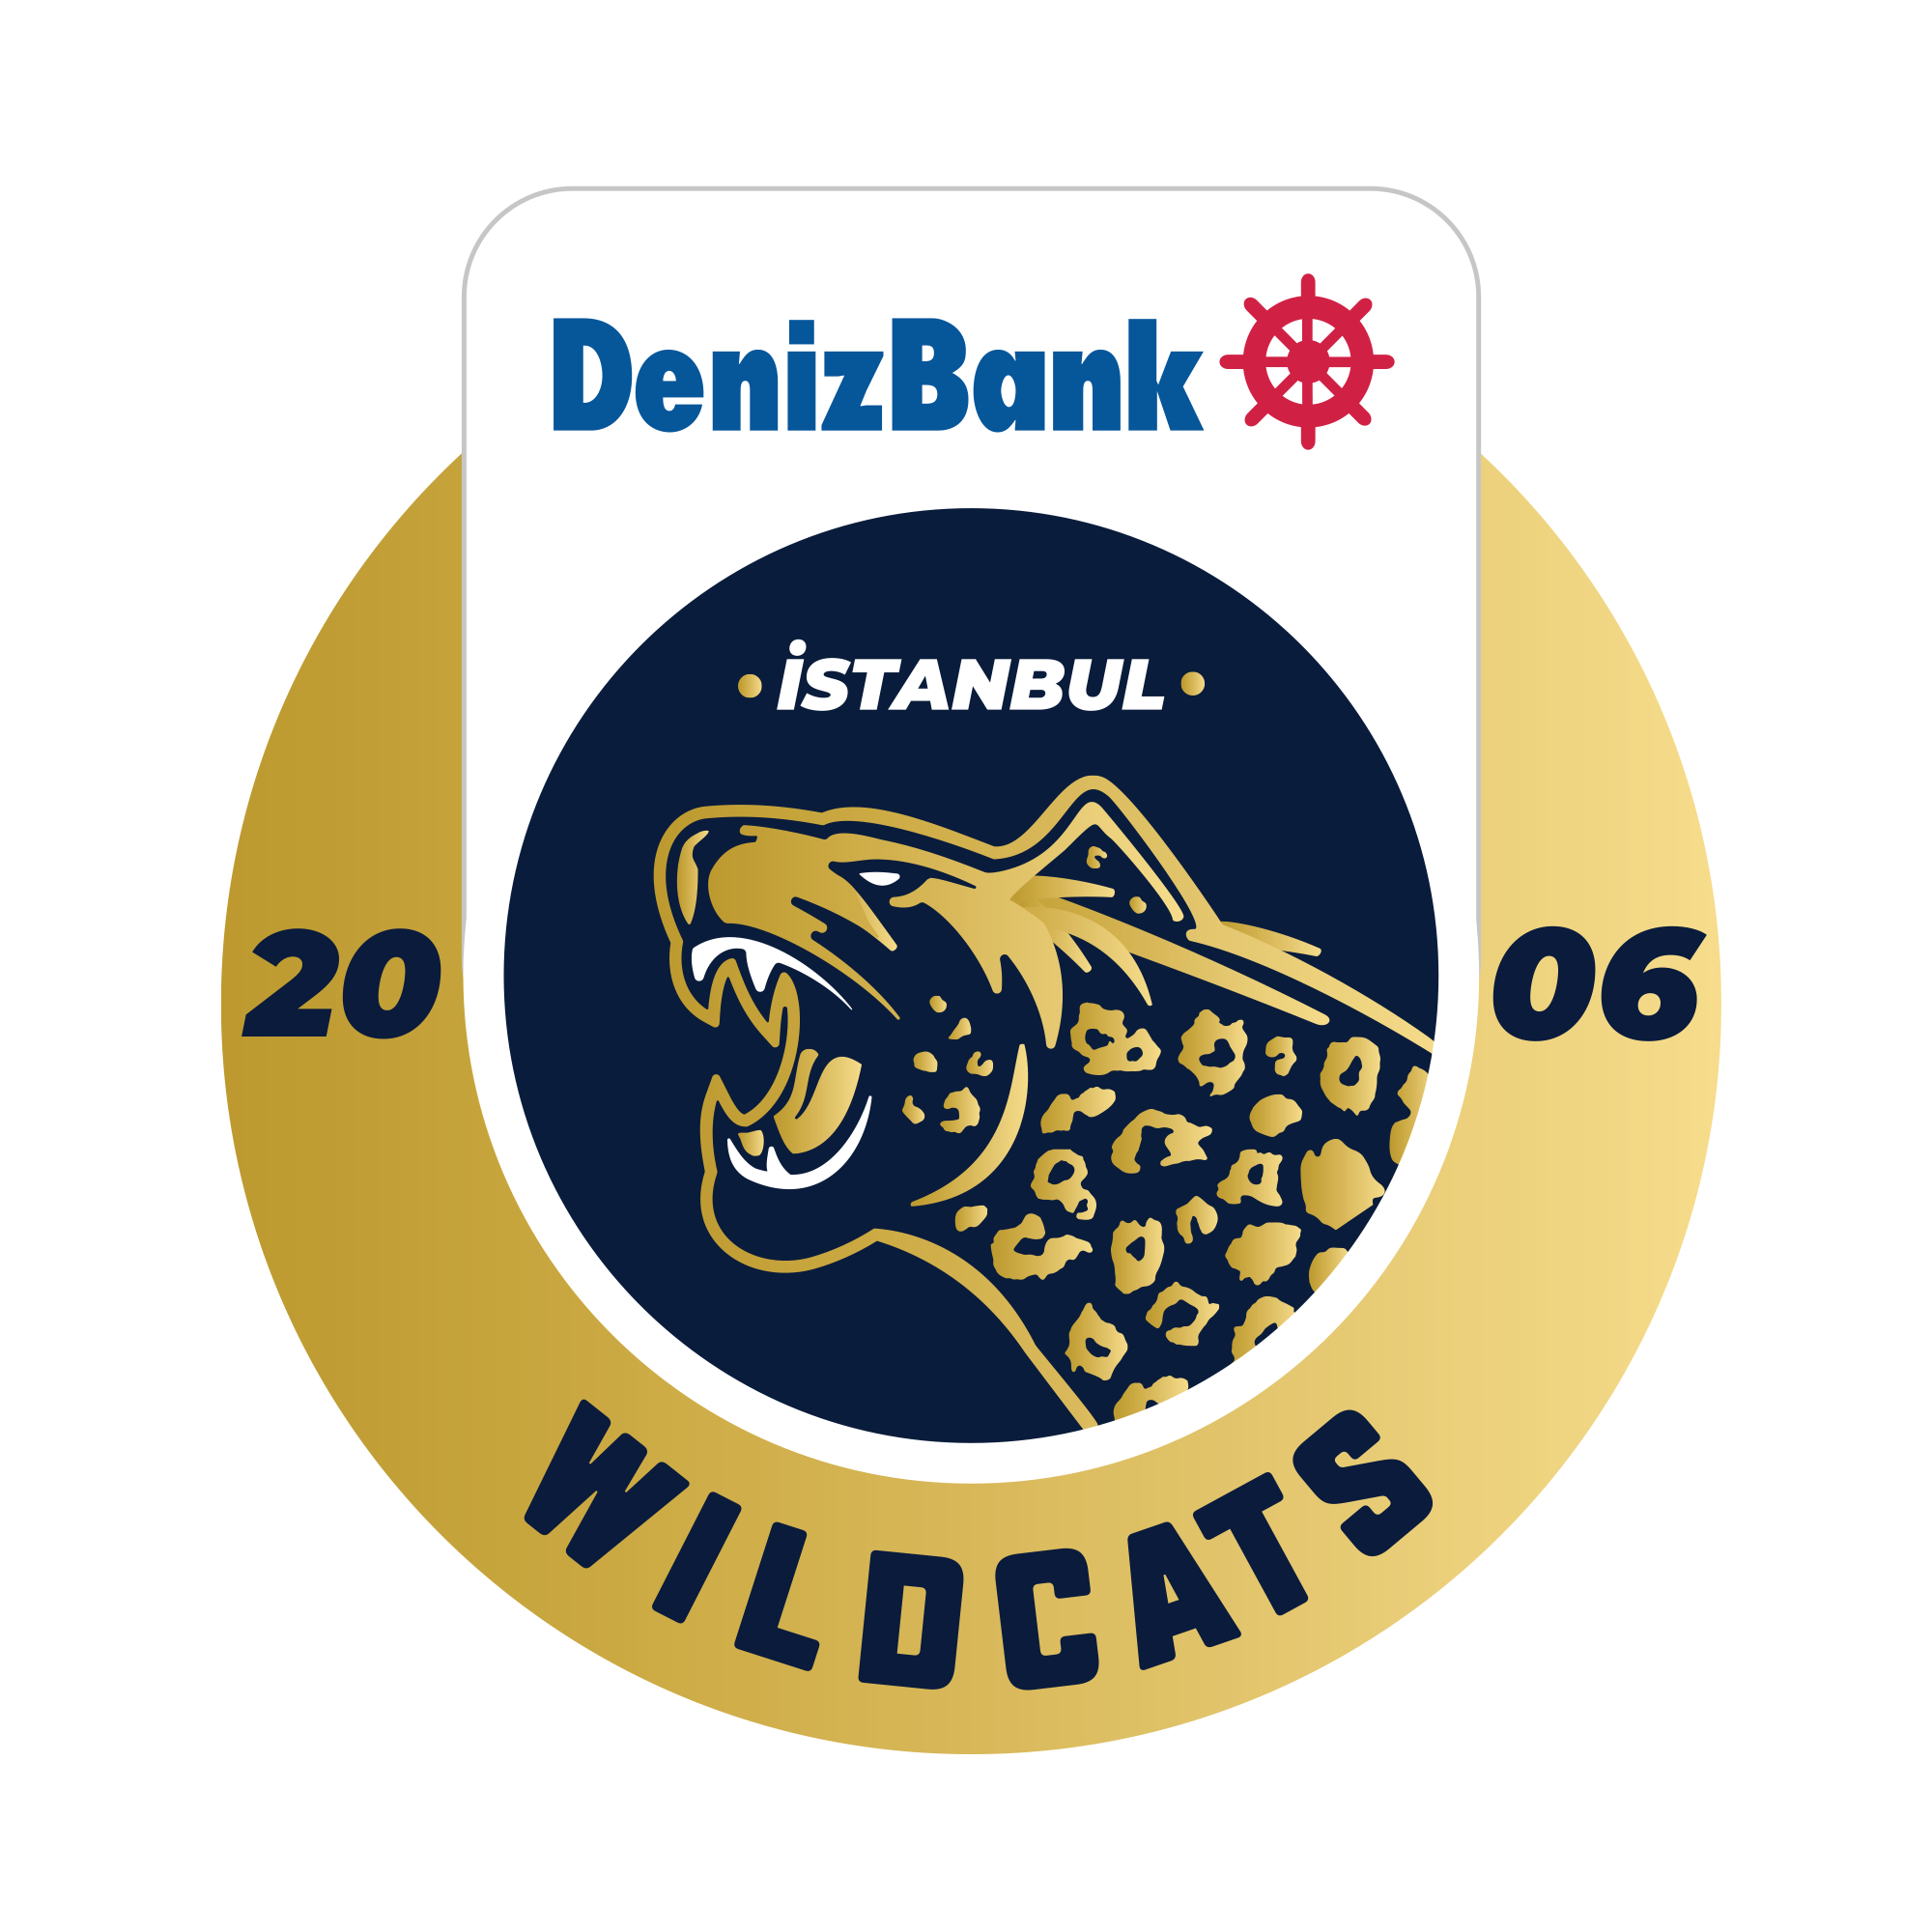 Denizbank Istanbul Wildcats